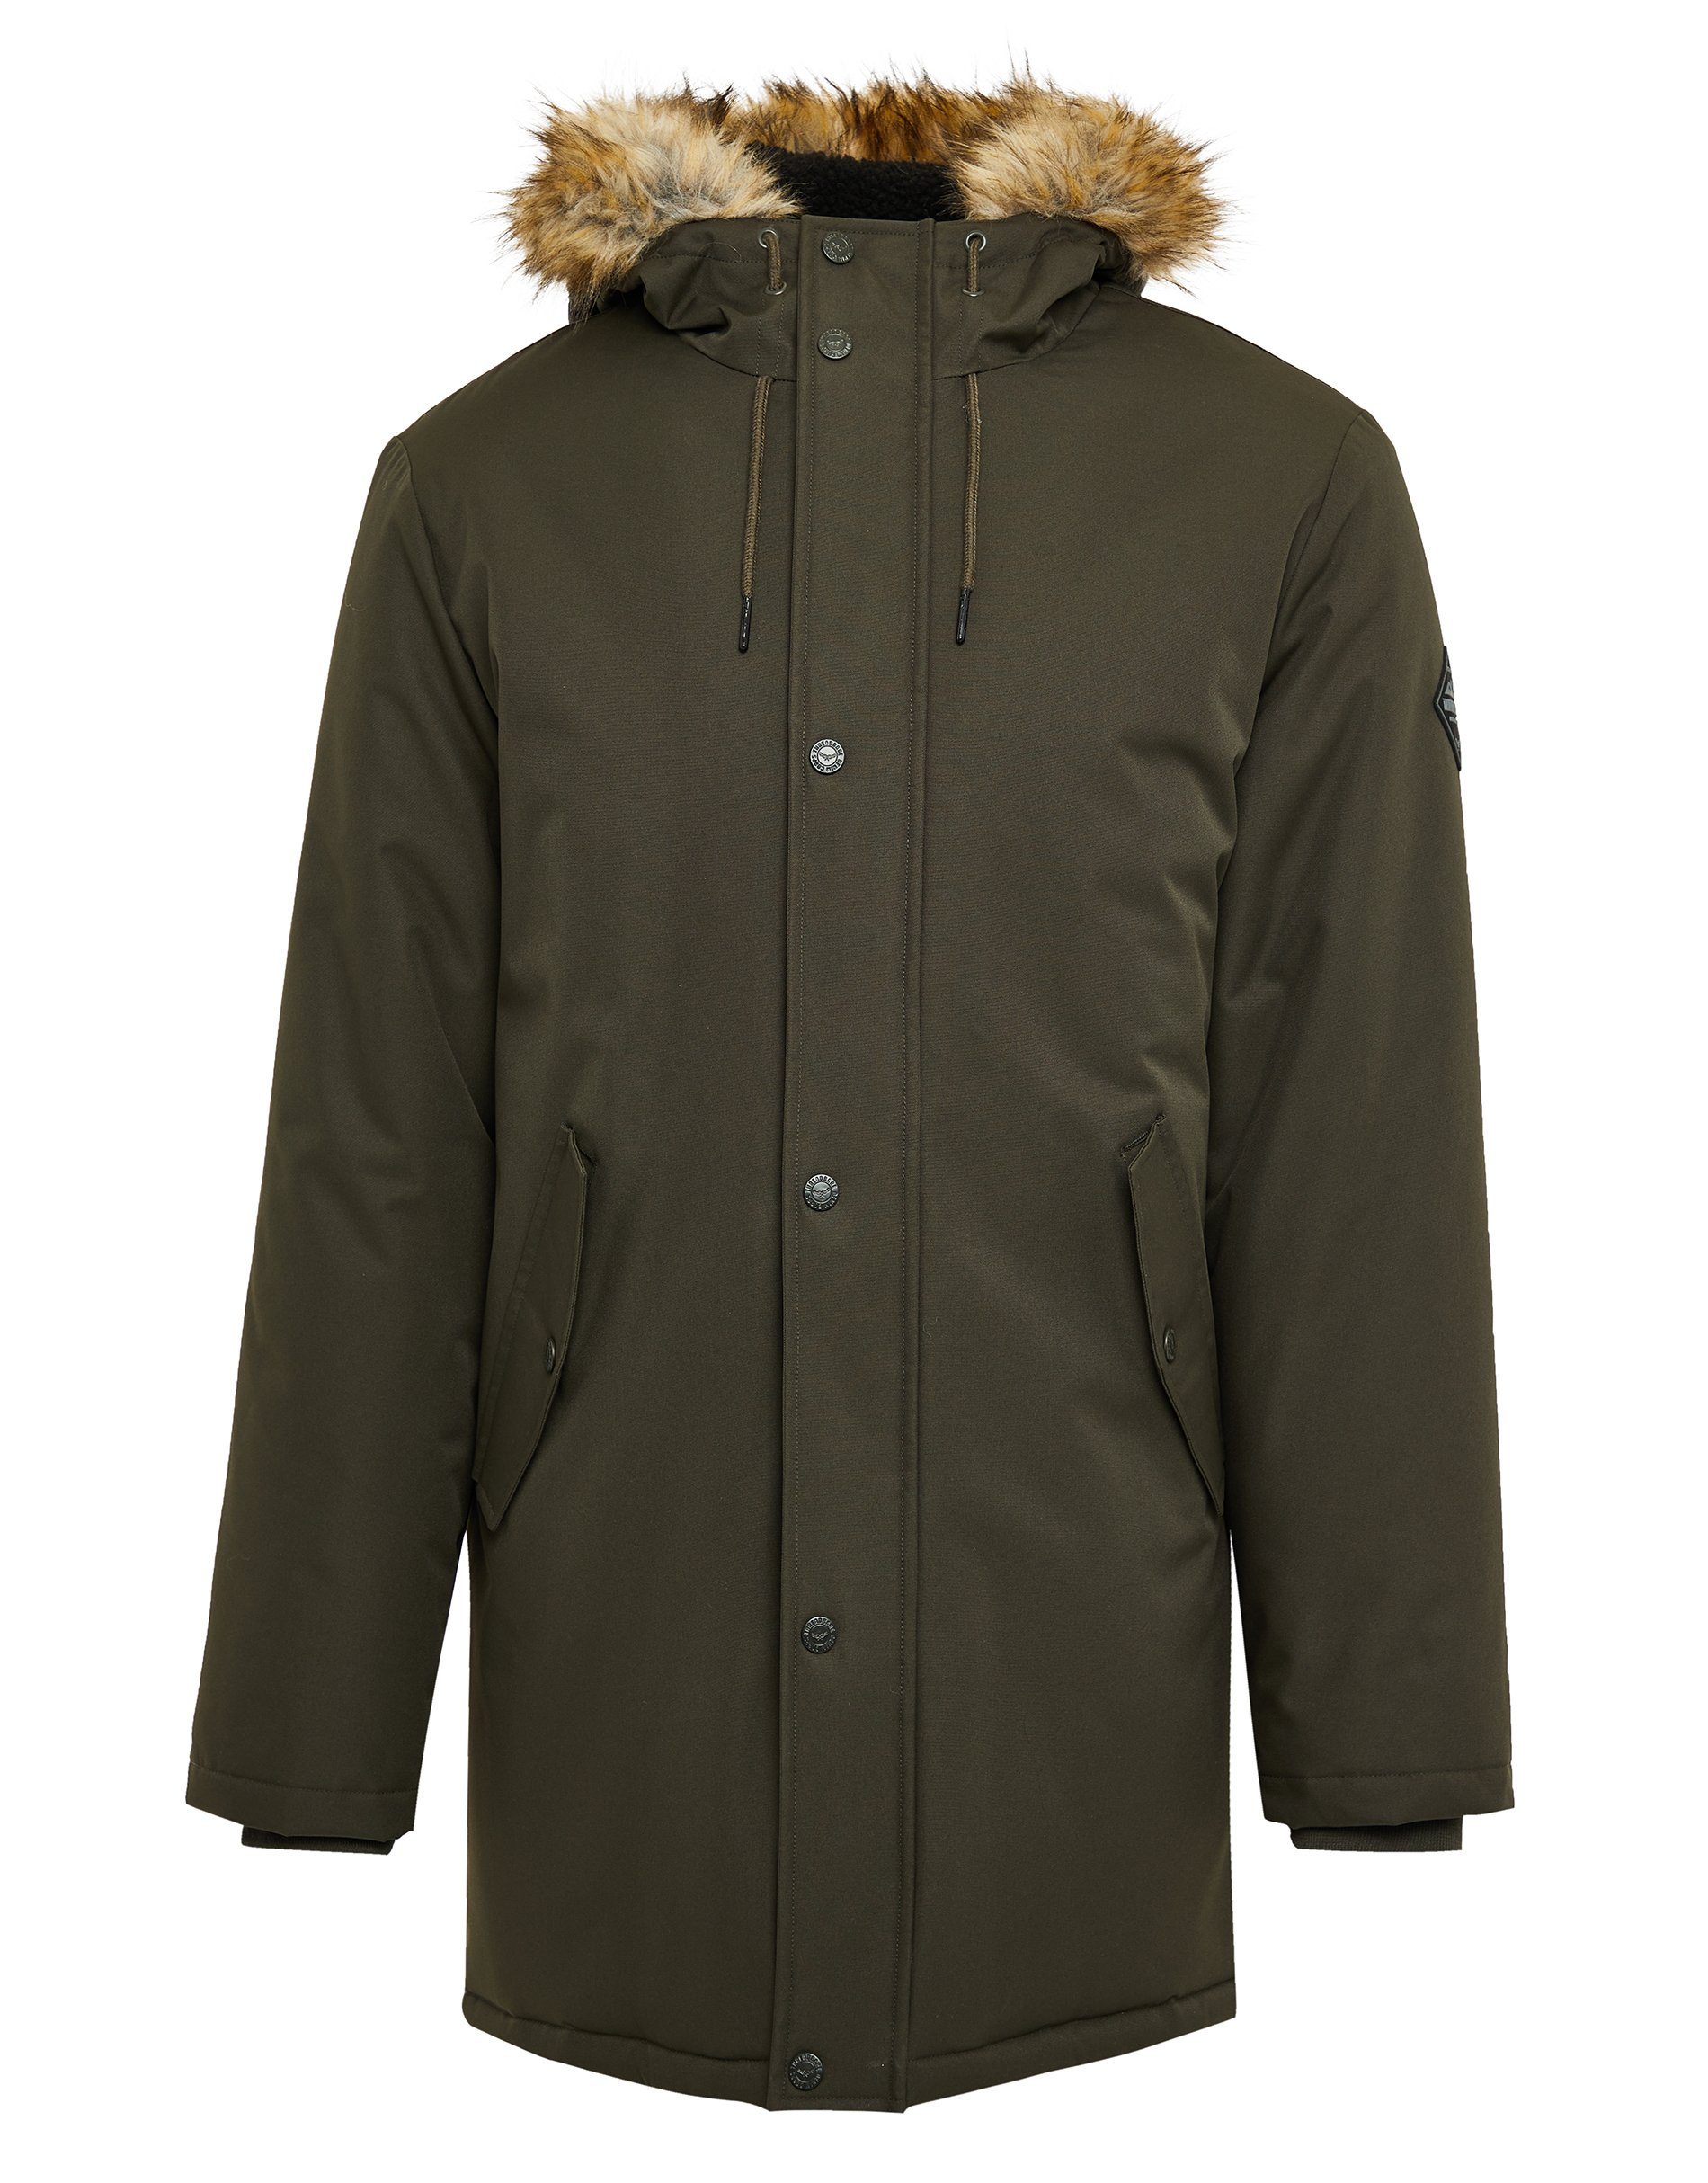 THB Recycled Threadbare Clarkston olivgrün (GRS) Jacket Khaki- zertifiziert Standard Winterjacke Global